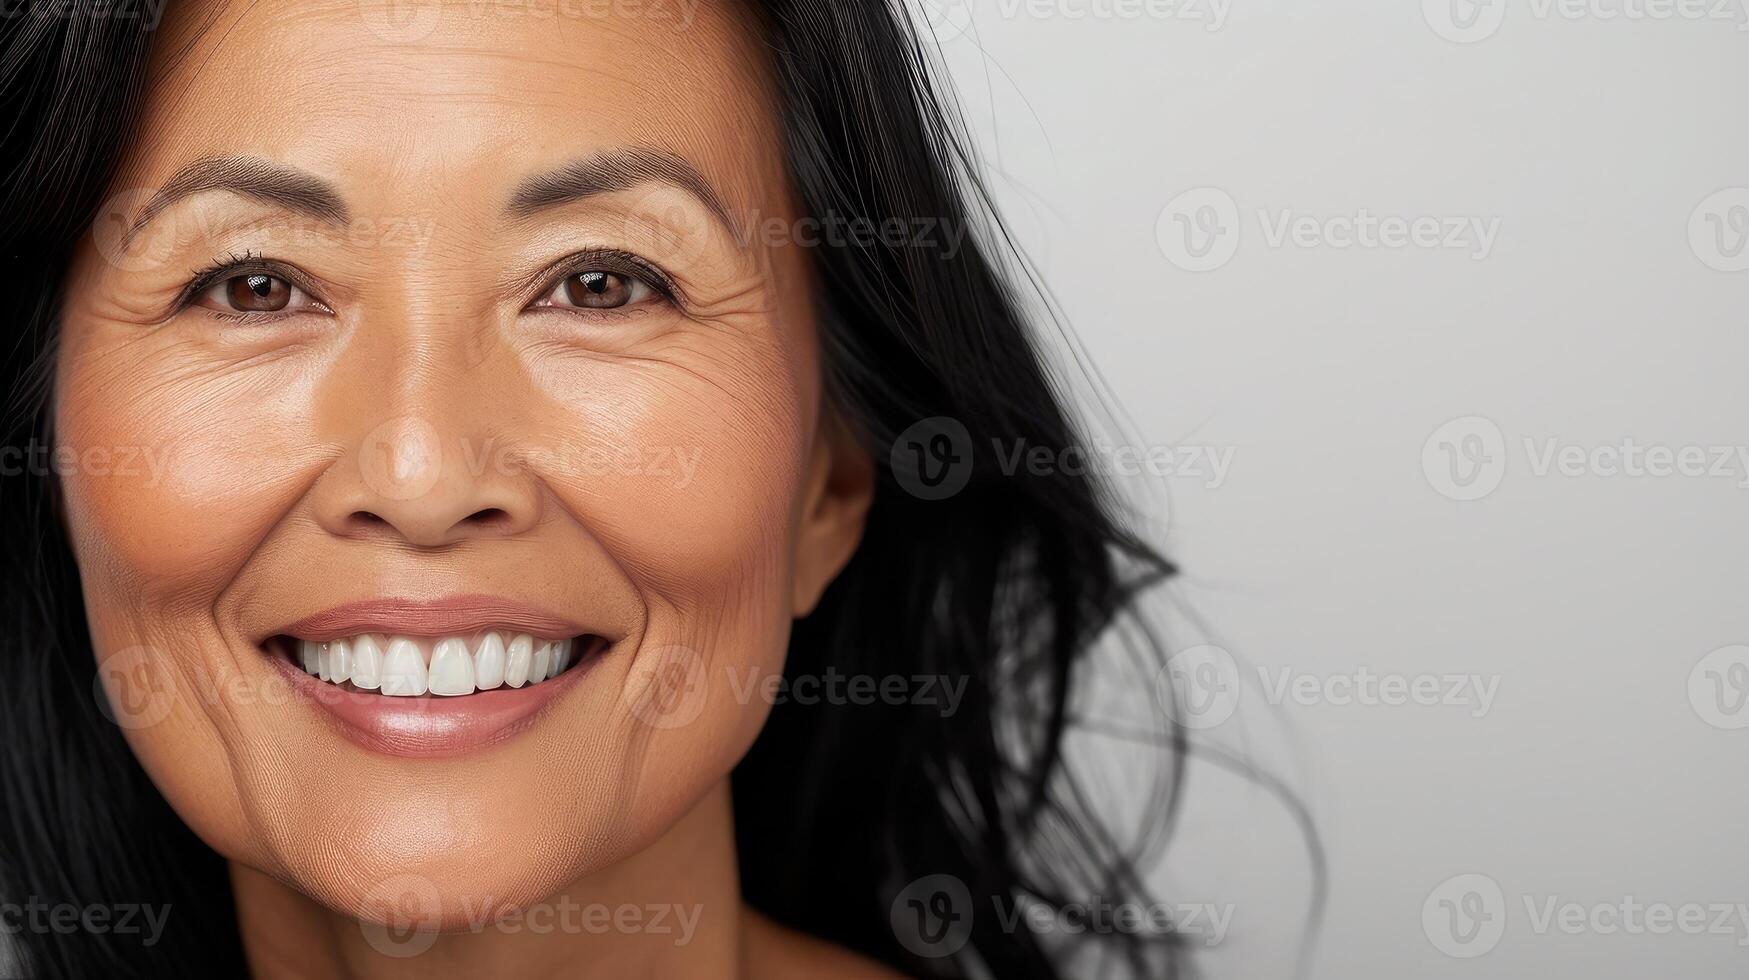 ai gegenereerd mooi volwassen Aziatisch vrouw glimlacht breed in studio. Rechtsaf kant ton afgesloten portret. wit achtergrond. foto